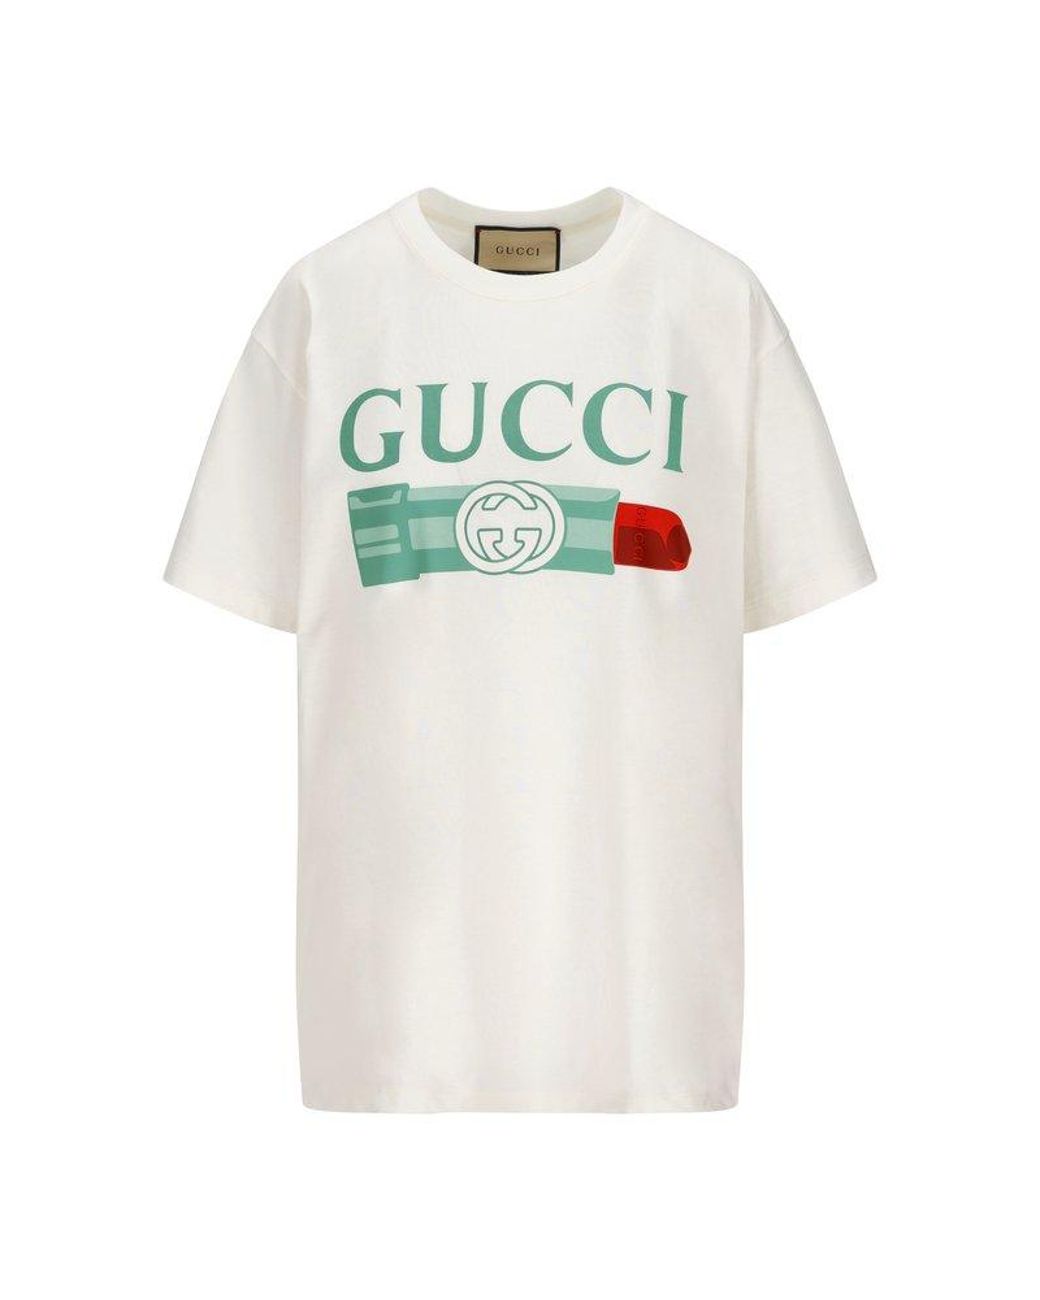 Gucci Lipstick Printed Crewneck T-shirt in White | Lyst